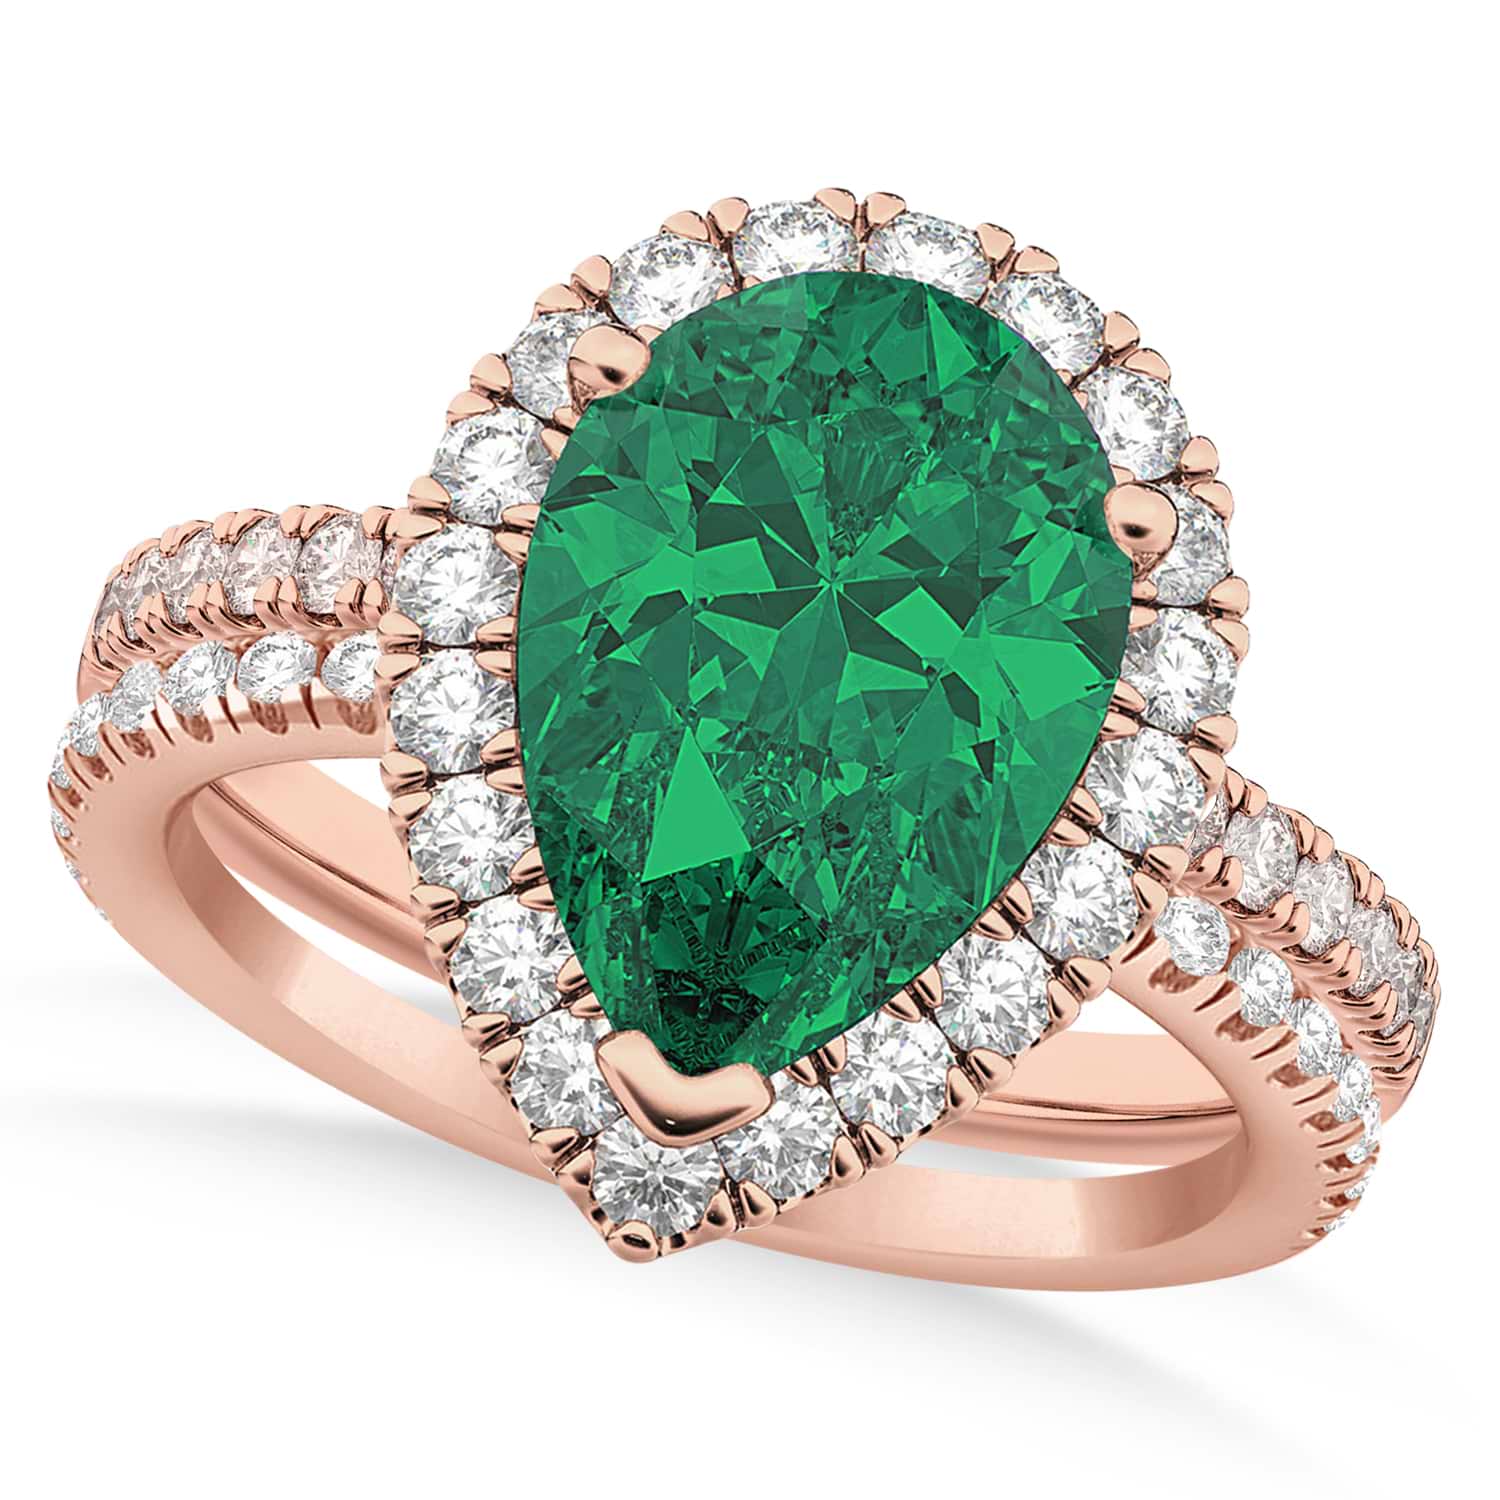 Emerald & Diamonds Pear-Cut Halo Bridal Set 14K Rose Gold (3.38ct)